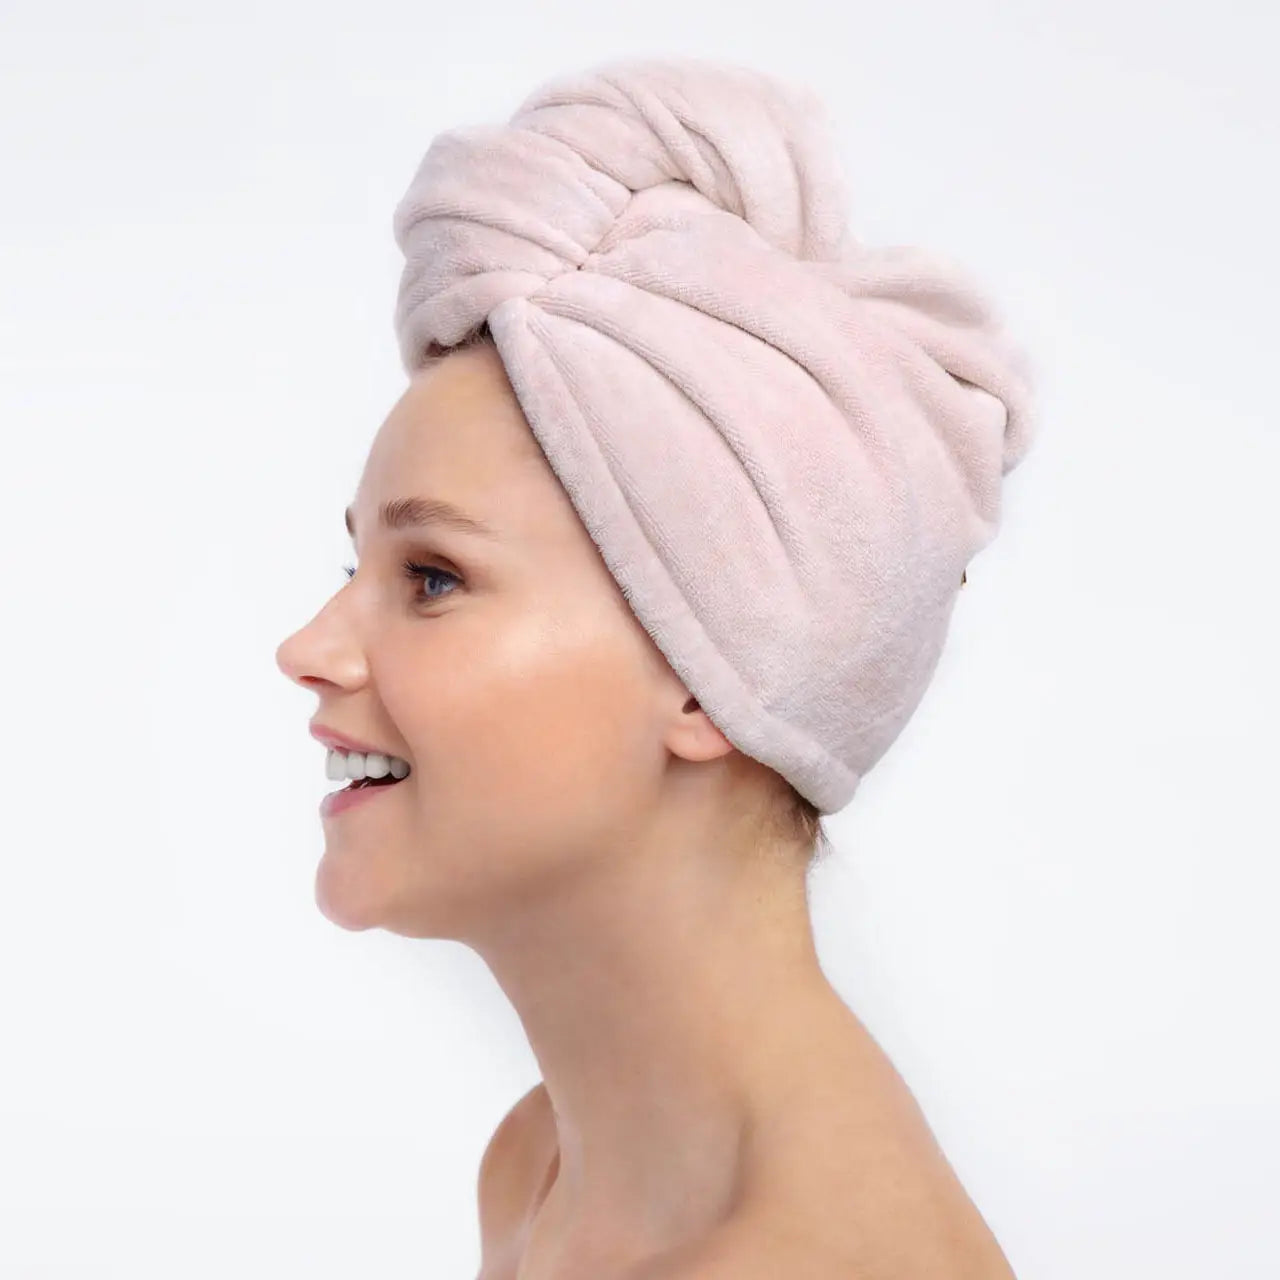 Blush Quick Drying Microfiber Hair Towel by Kitsch